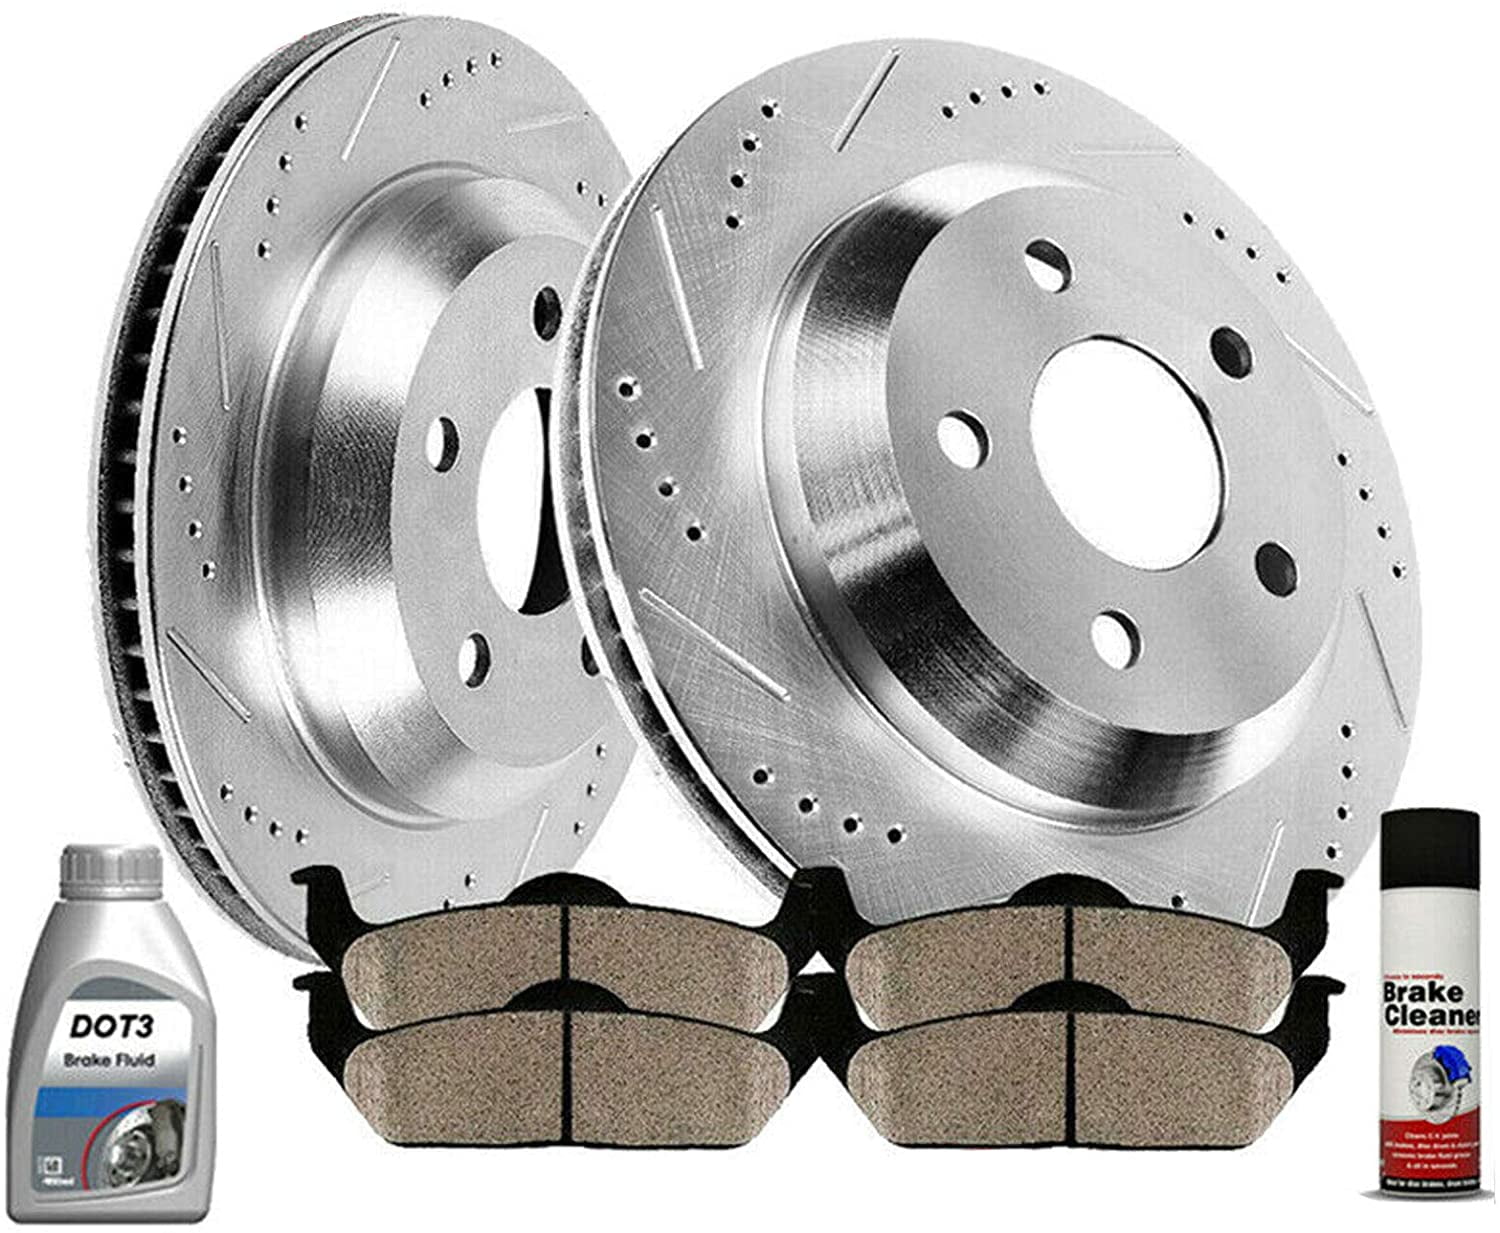 Front Ceramic Pads Rotors Brake Discs For Ford C-Max 2012-2013 Volvo C30 S40